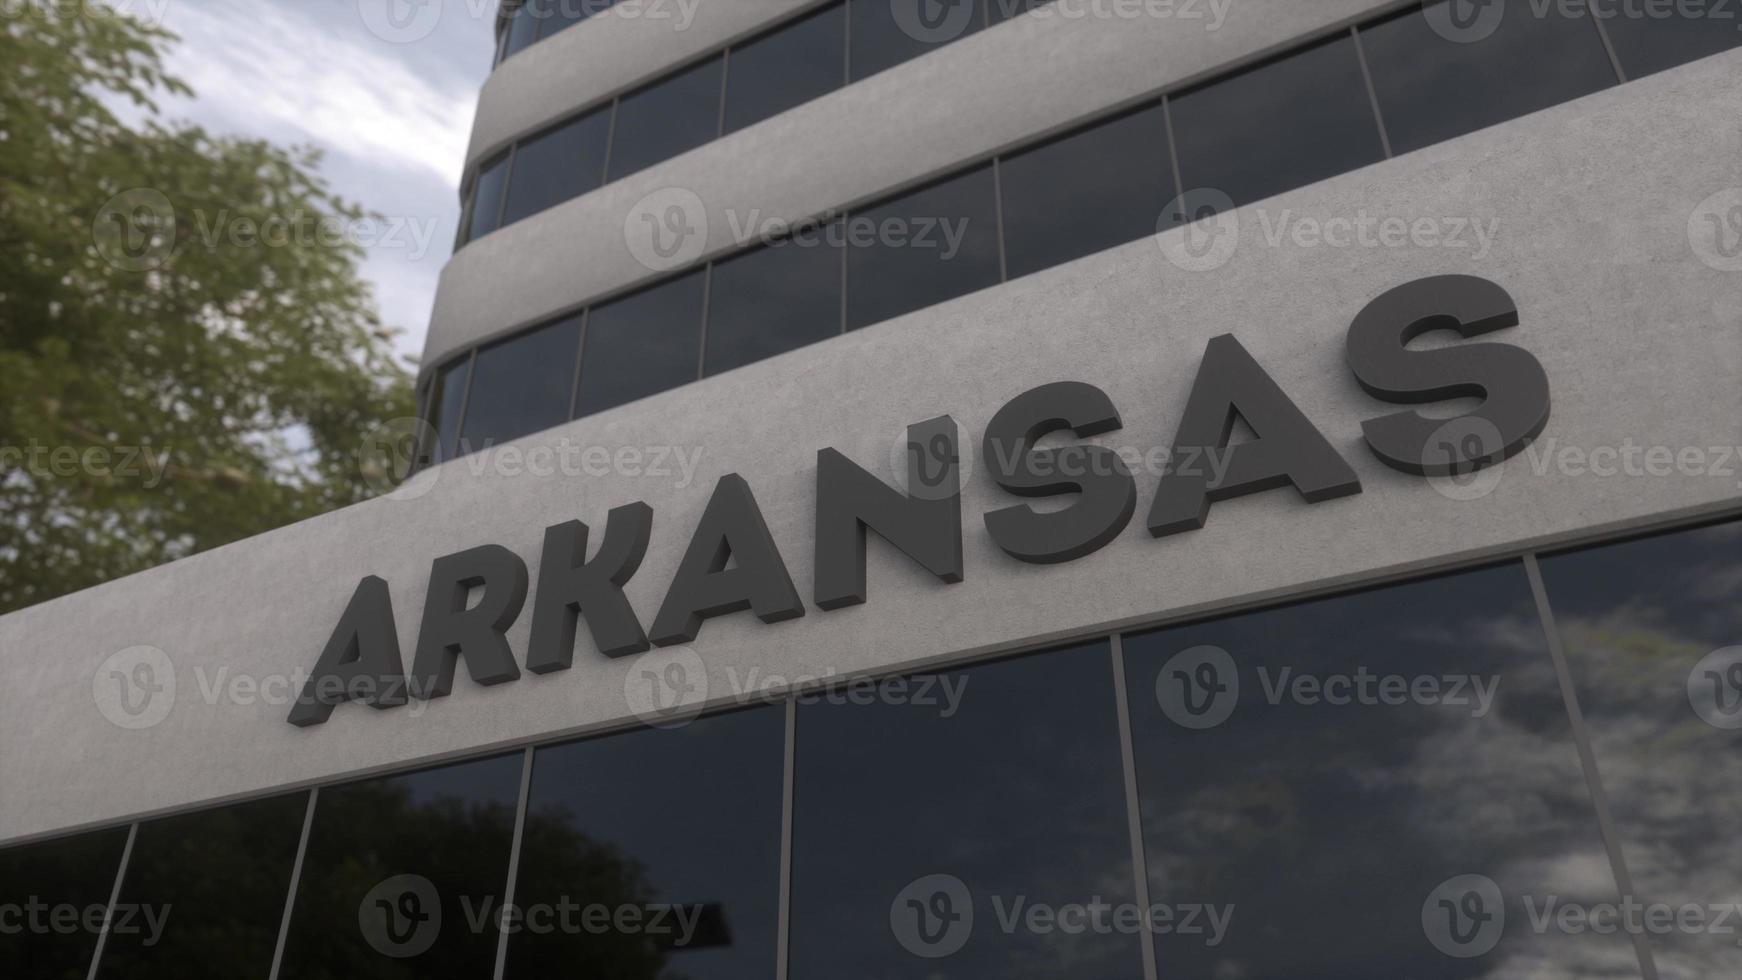 Arkansas sign on a modern skyscraper. Arkansas building. 3d illustration photo